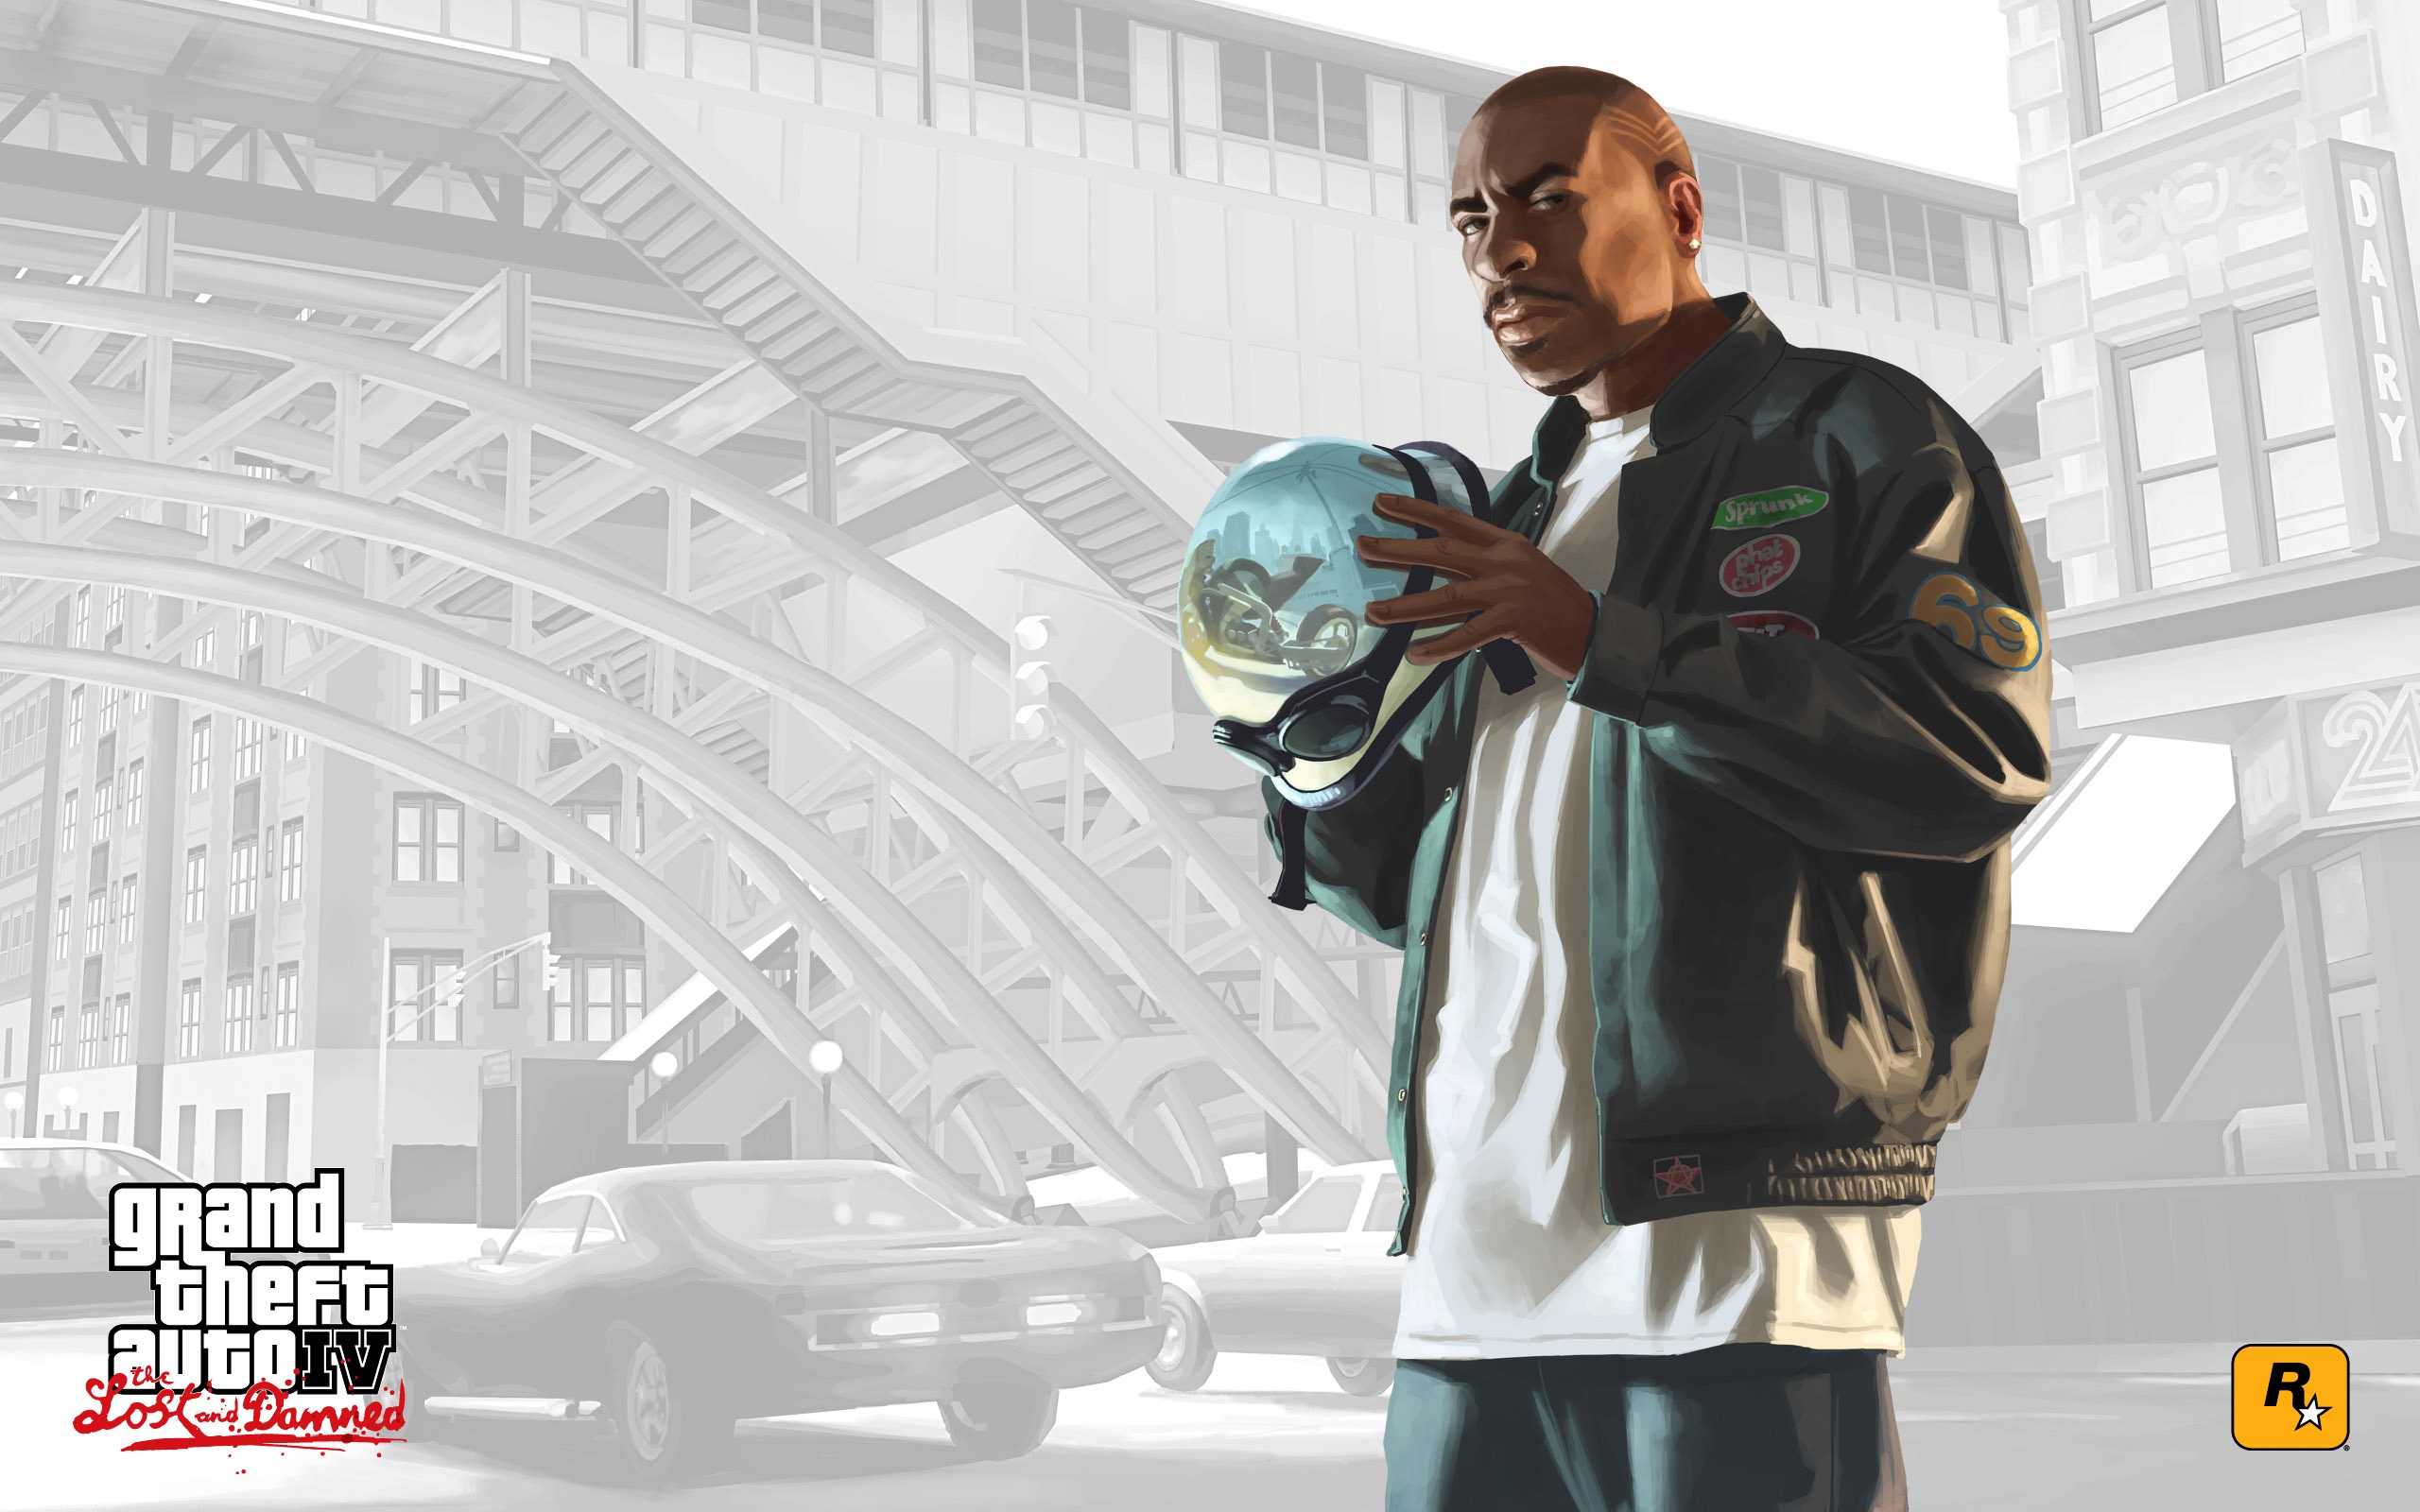 Grand Theft Auto: Vice City fondos de escritorio de alta definición #20 - 2560x1600